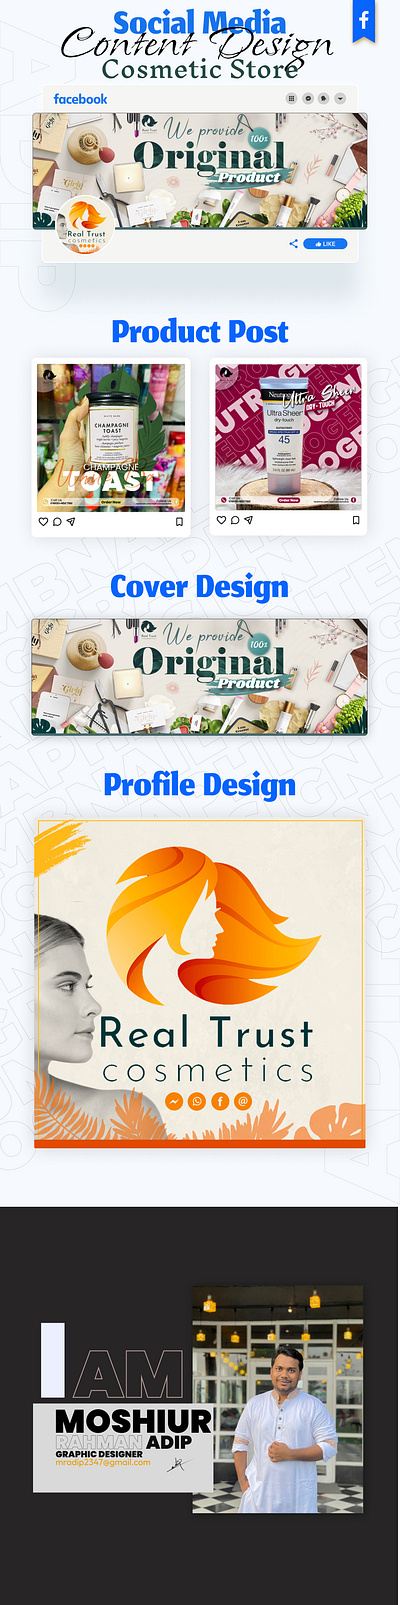 Social Media Content Design content design cover design design graphic design post design